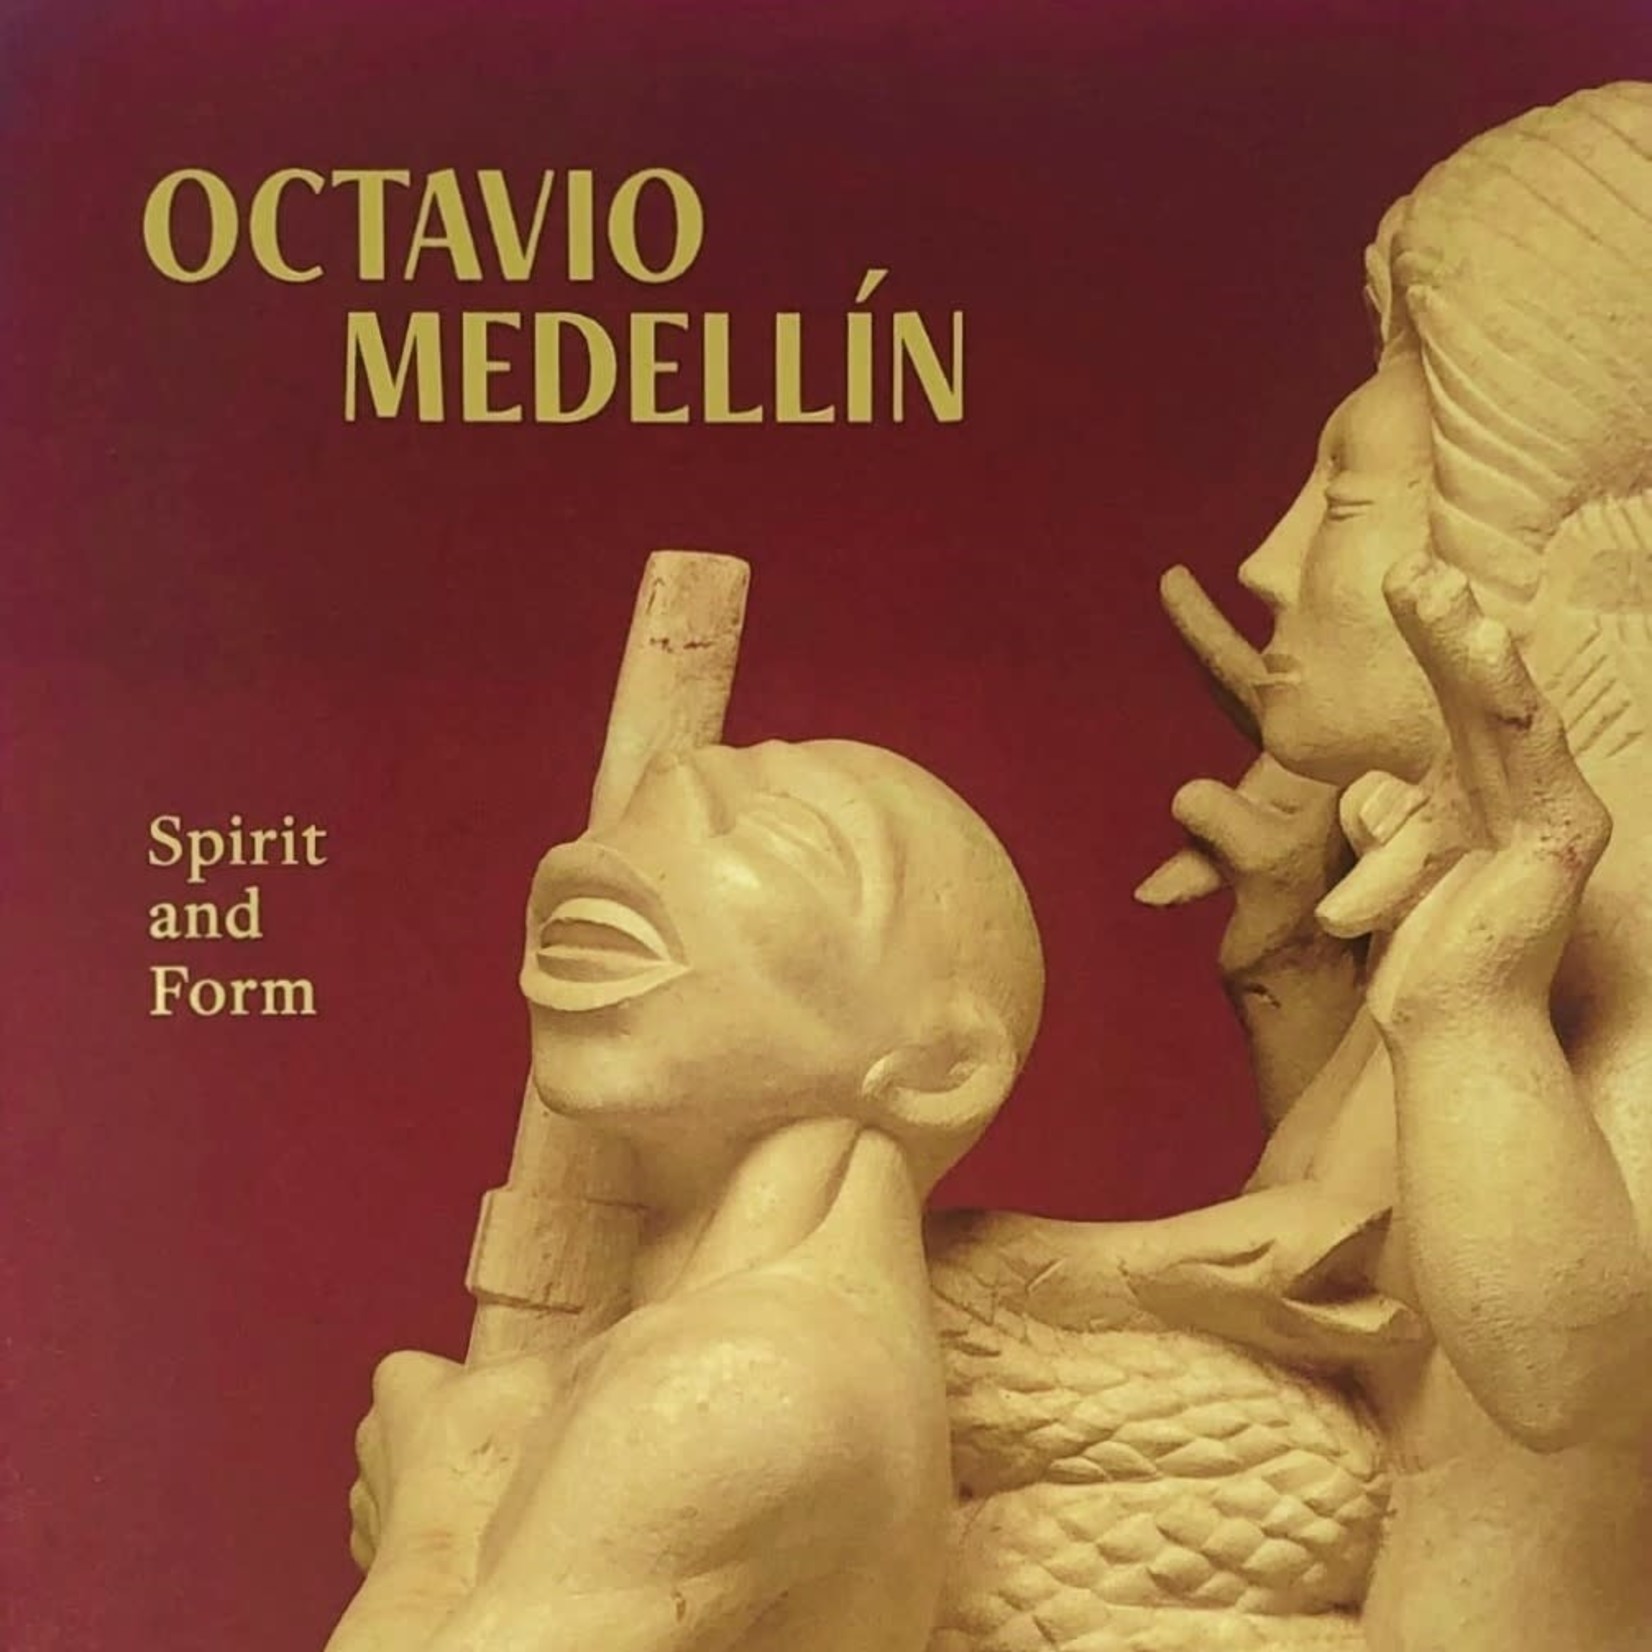 DMA PUBLICATIONS OCTAVIO MEDELLIN: SPIRIT AND FORM